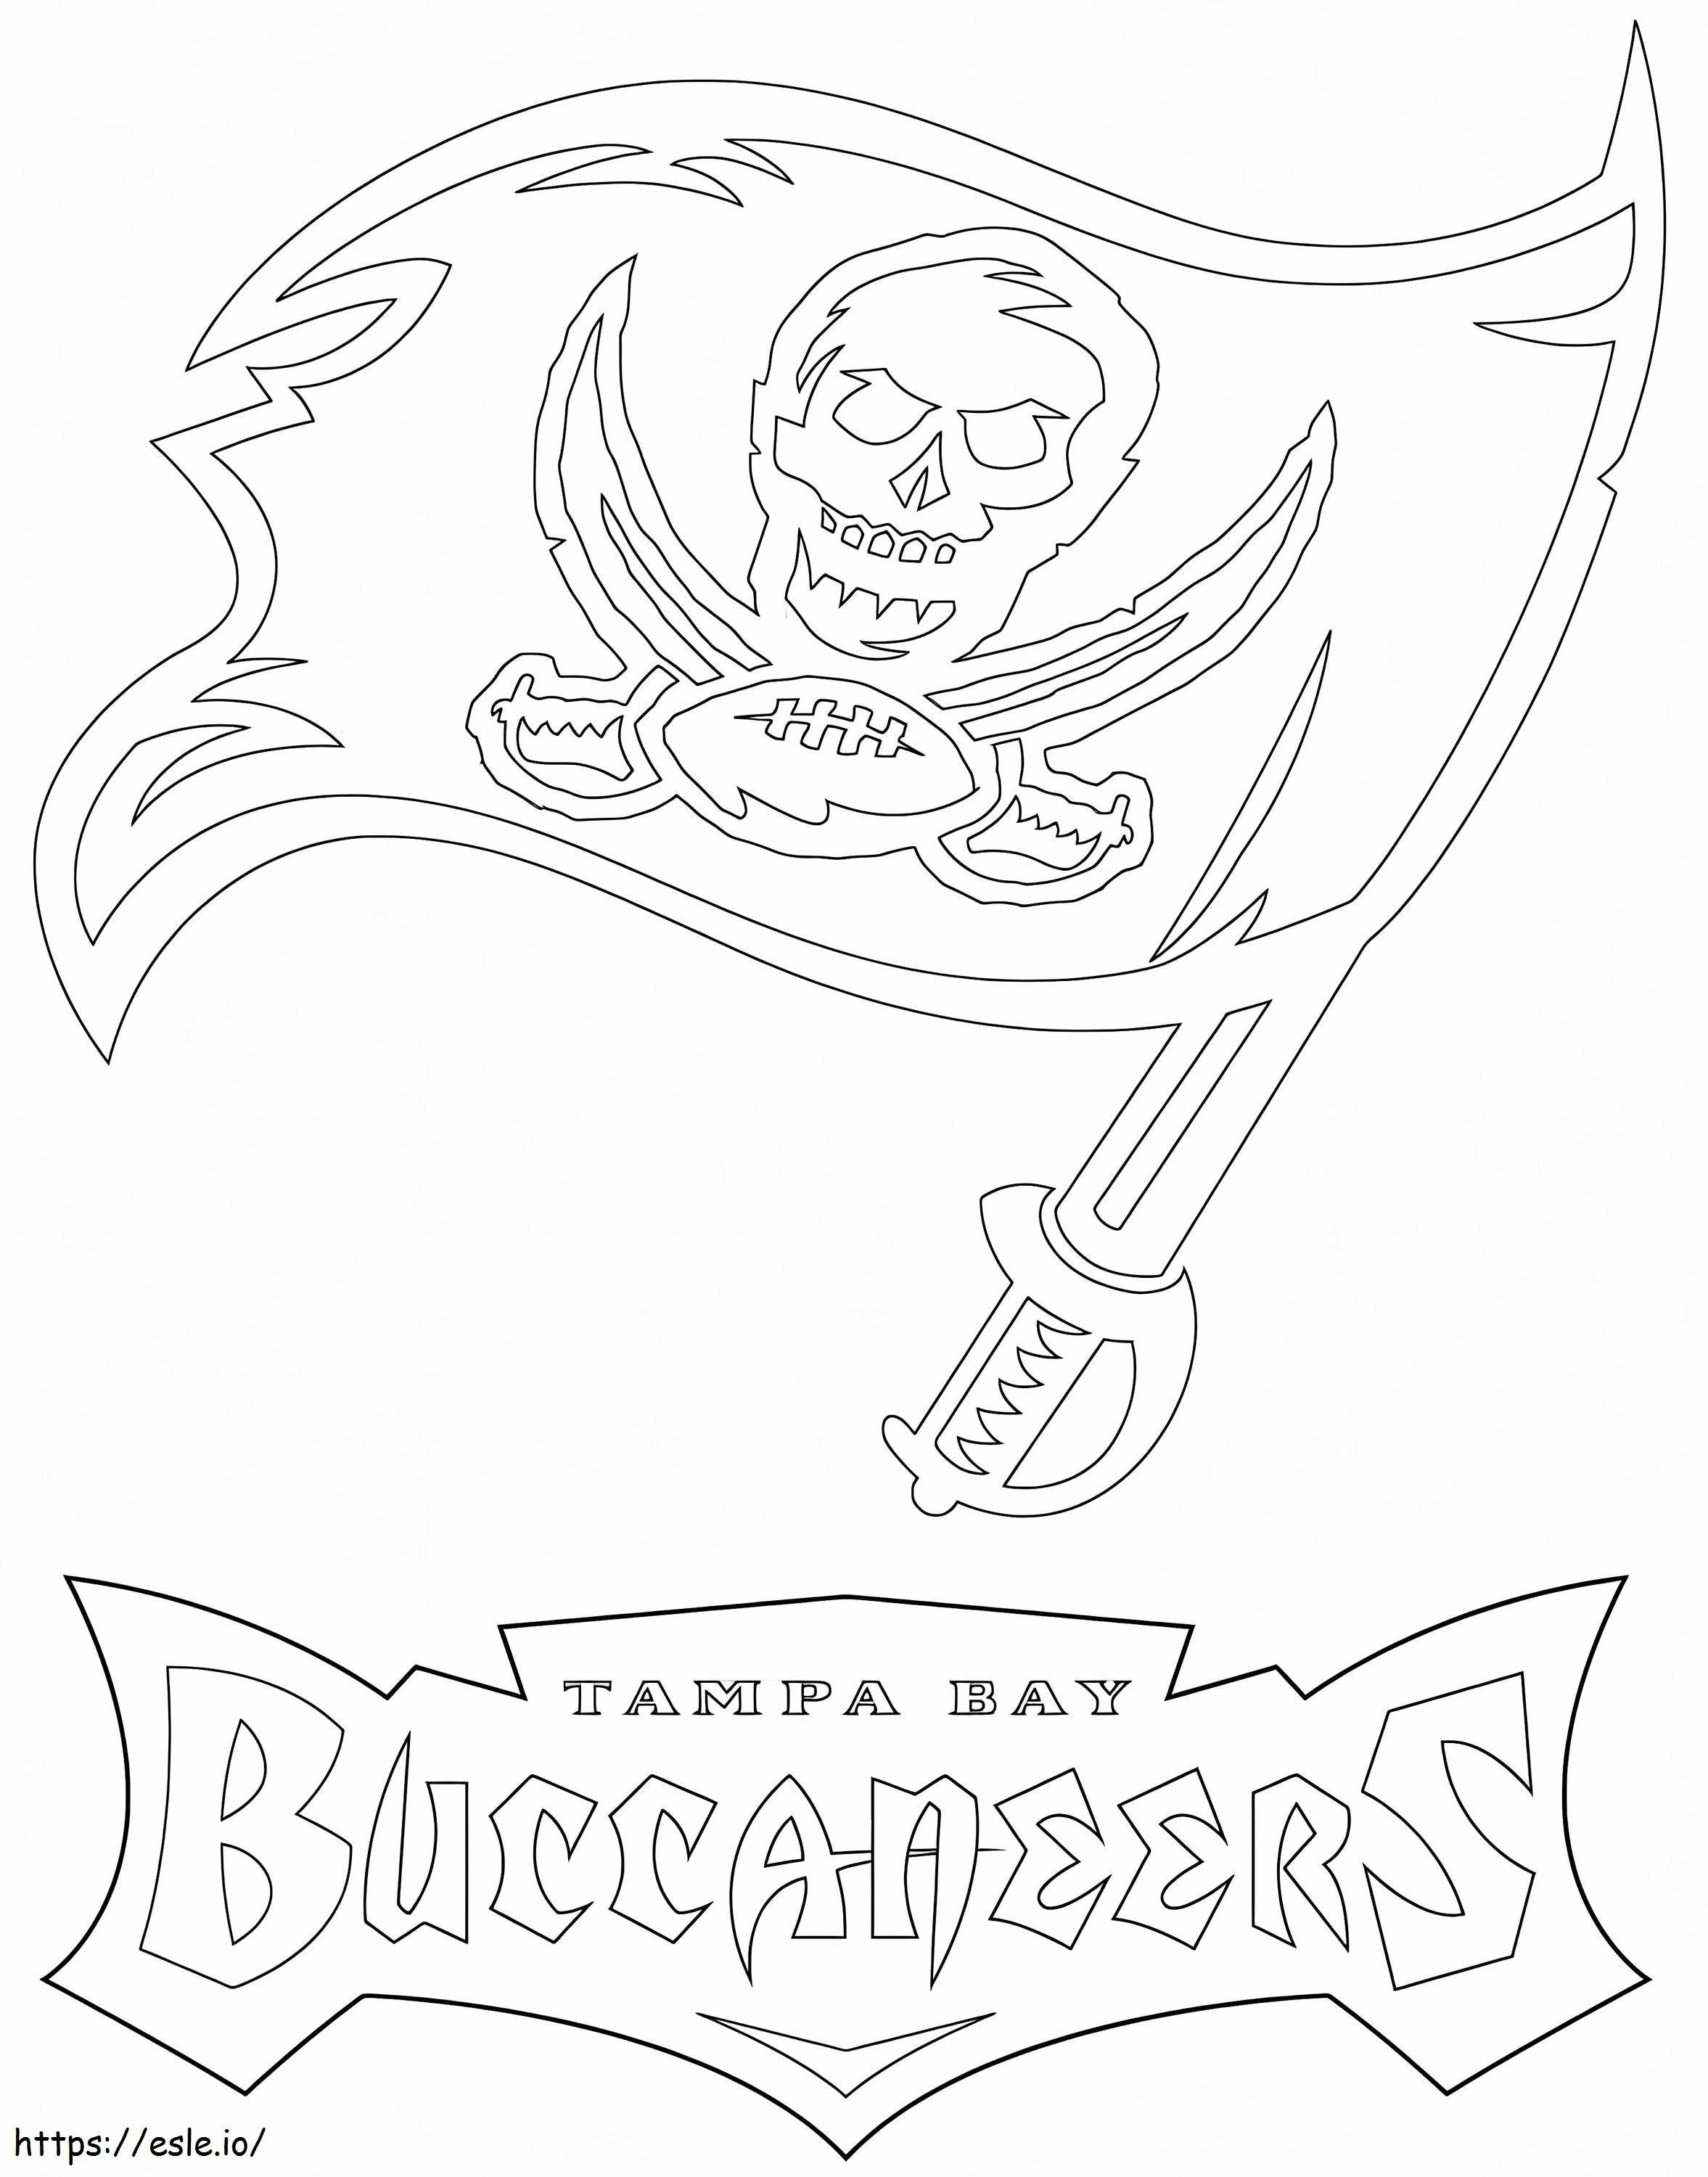 Tampa Bay Buccaneers-Logo ausmalbilder